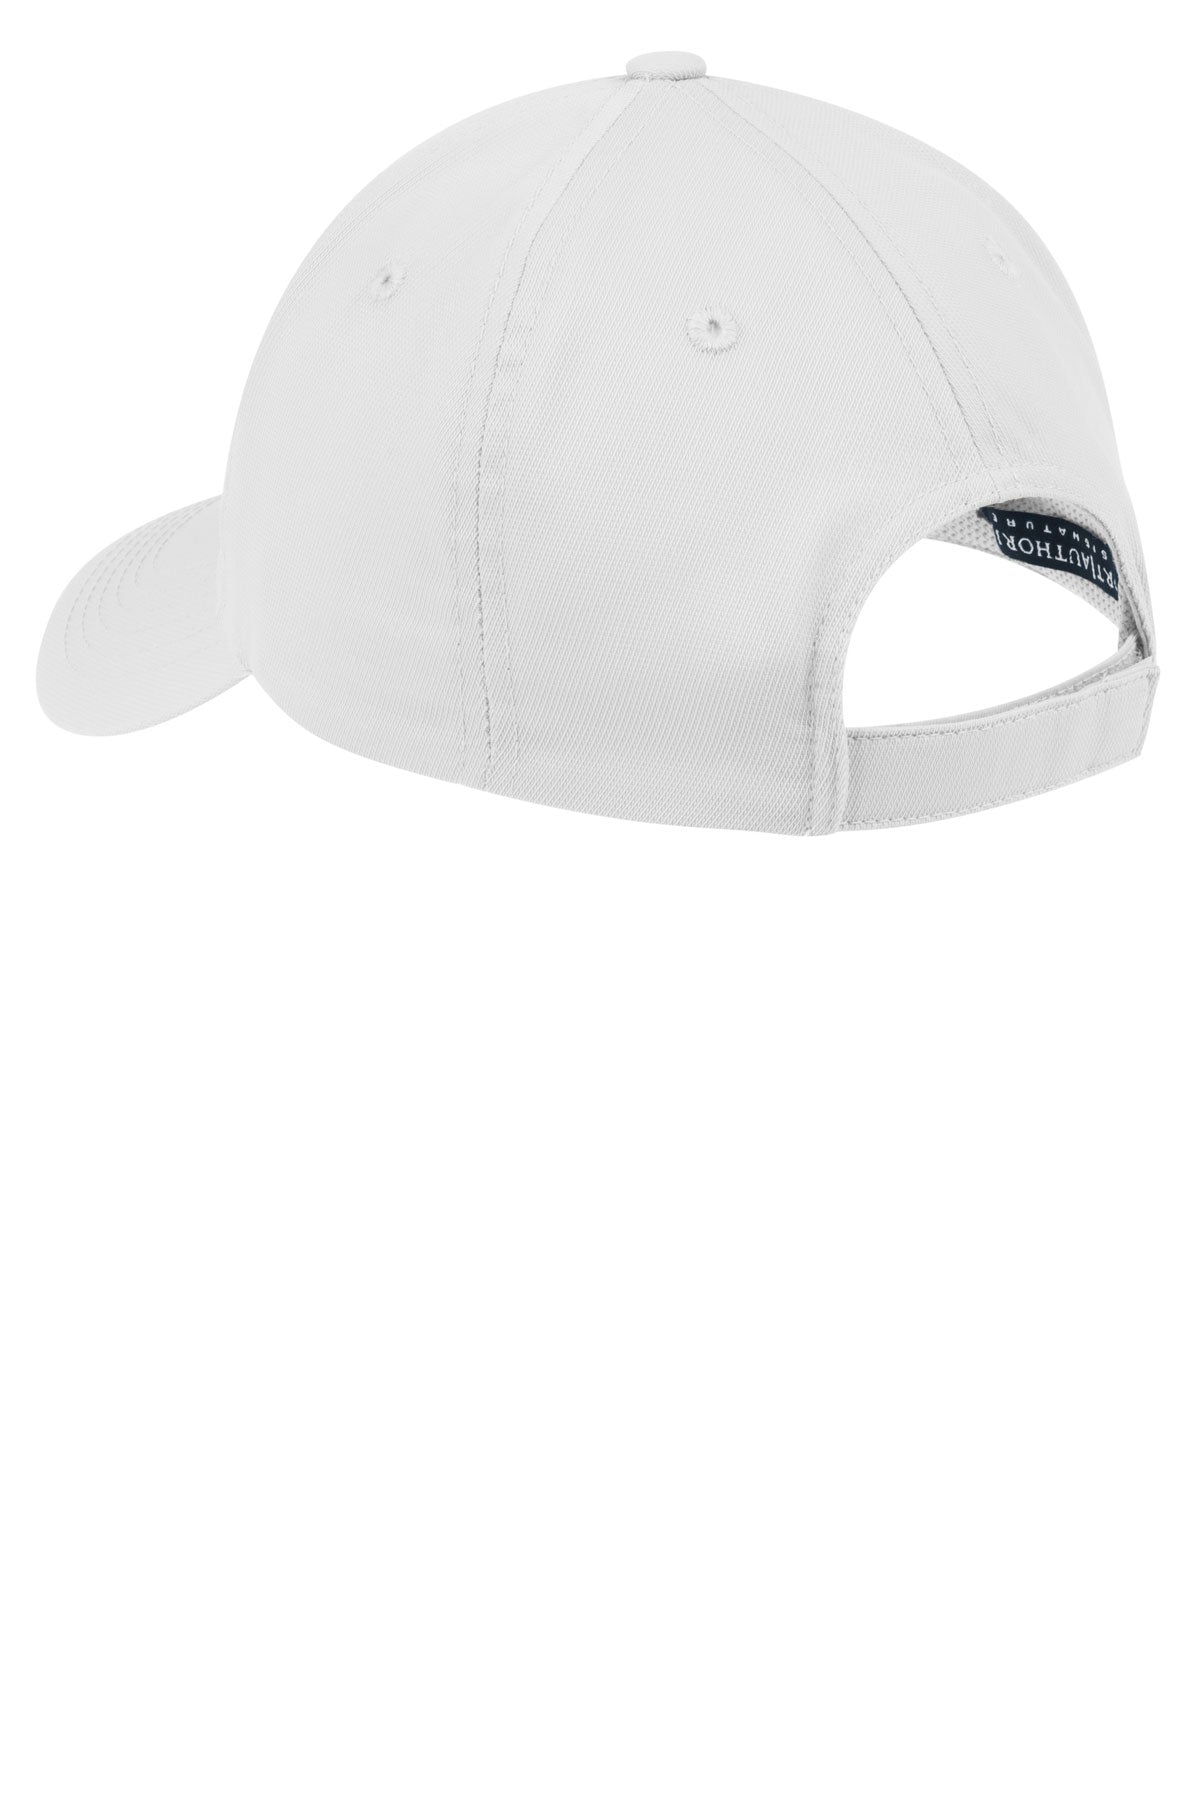 Port Authority Nylon Twill Custom Performance Caps, White